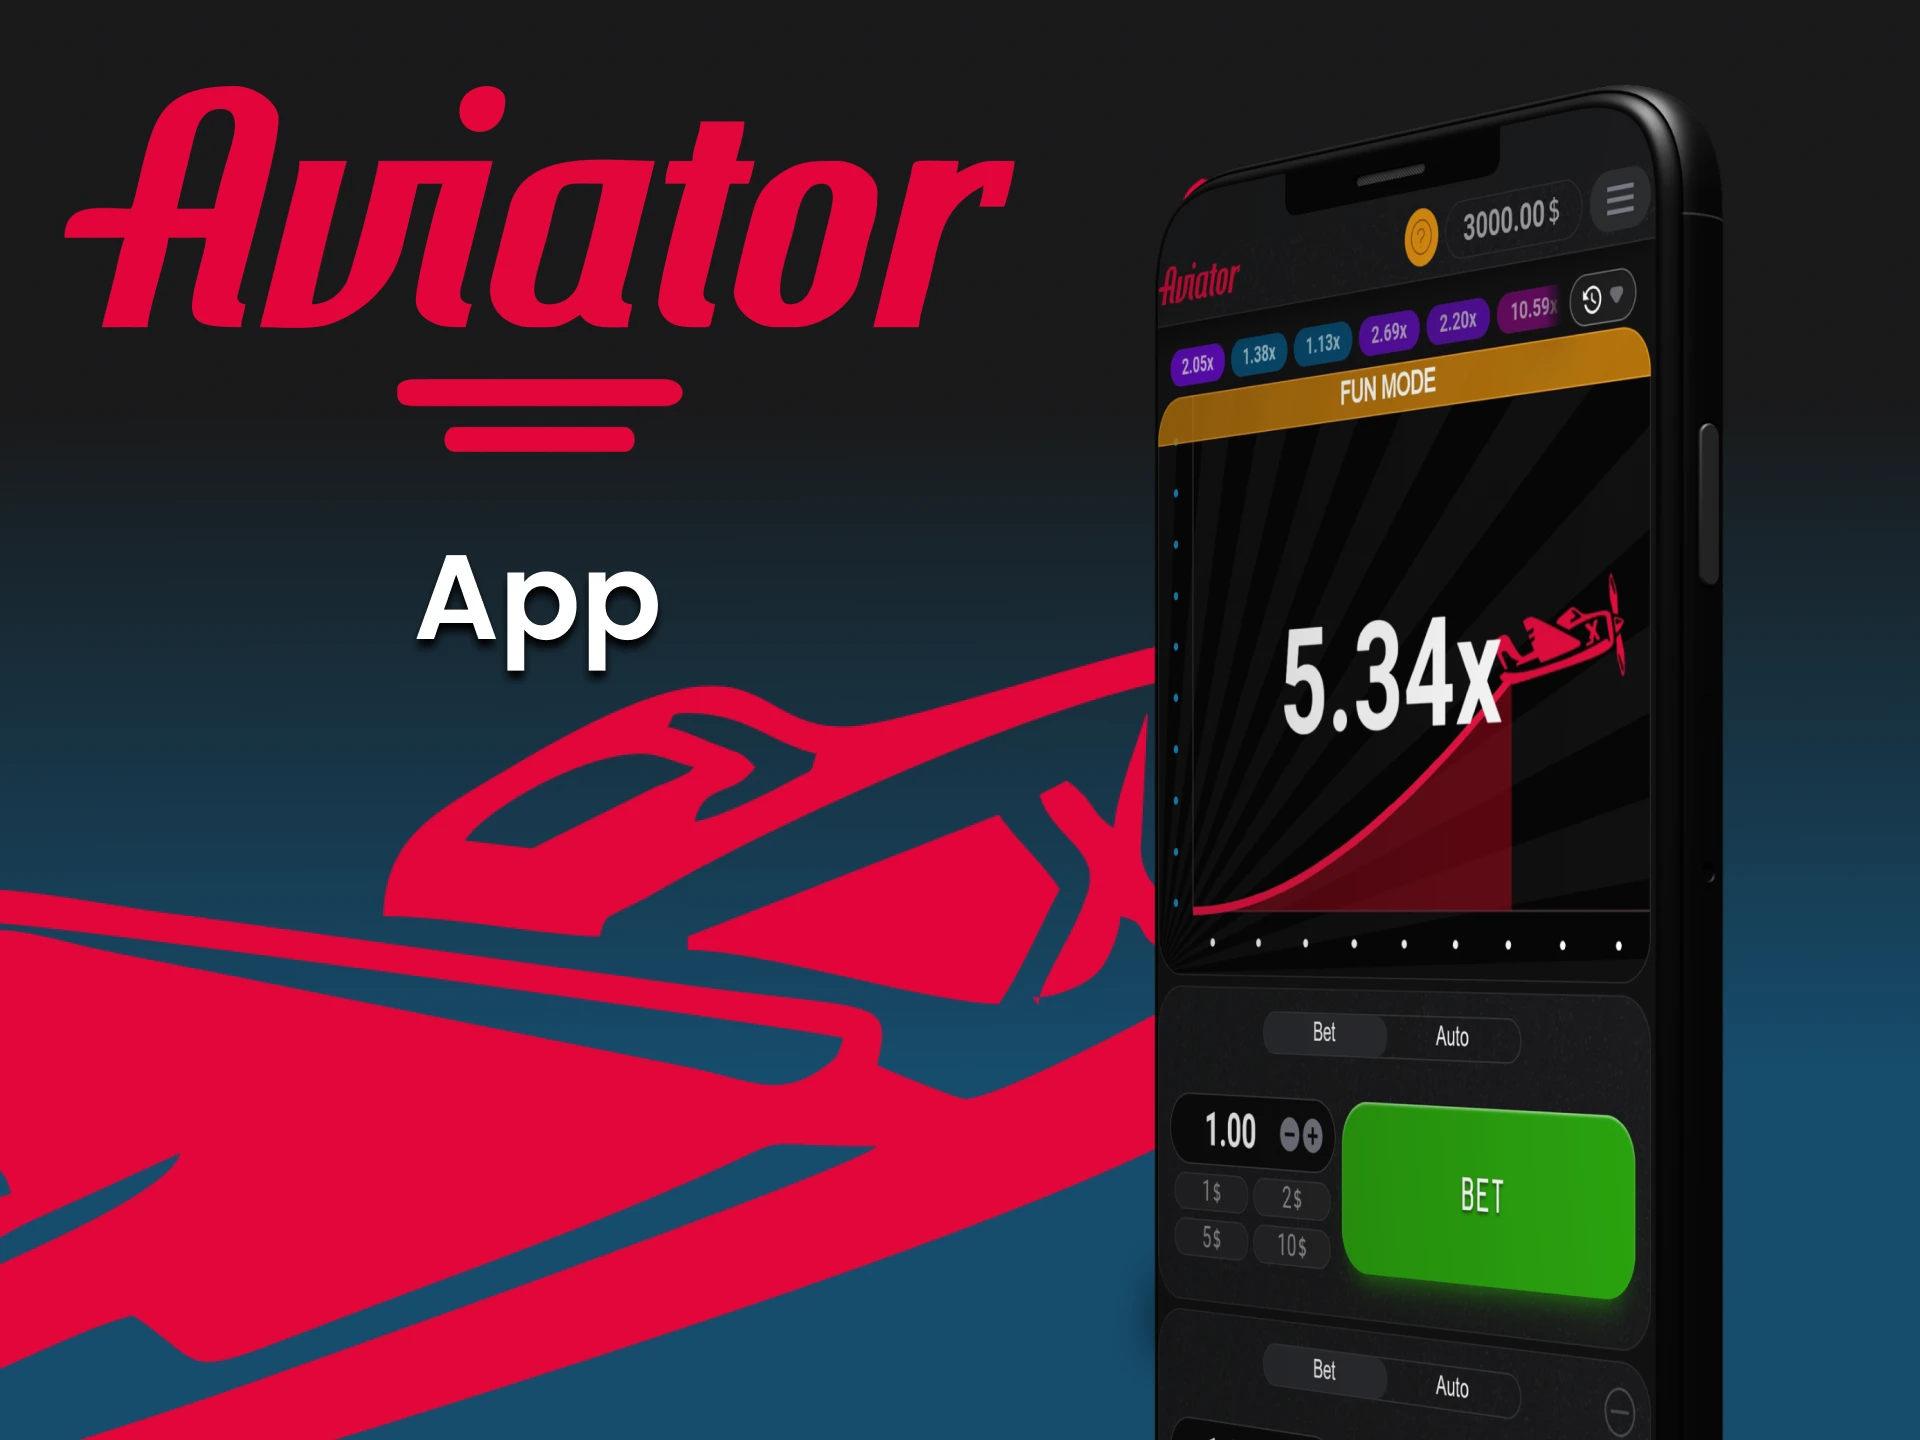 Play Aviator through the app.